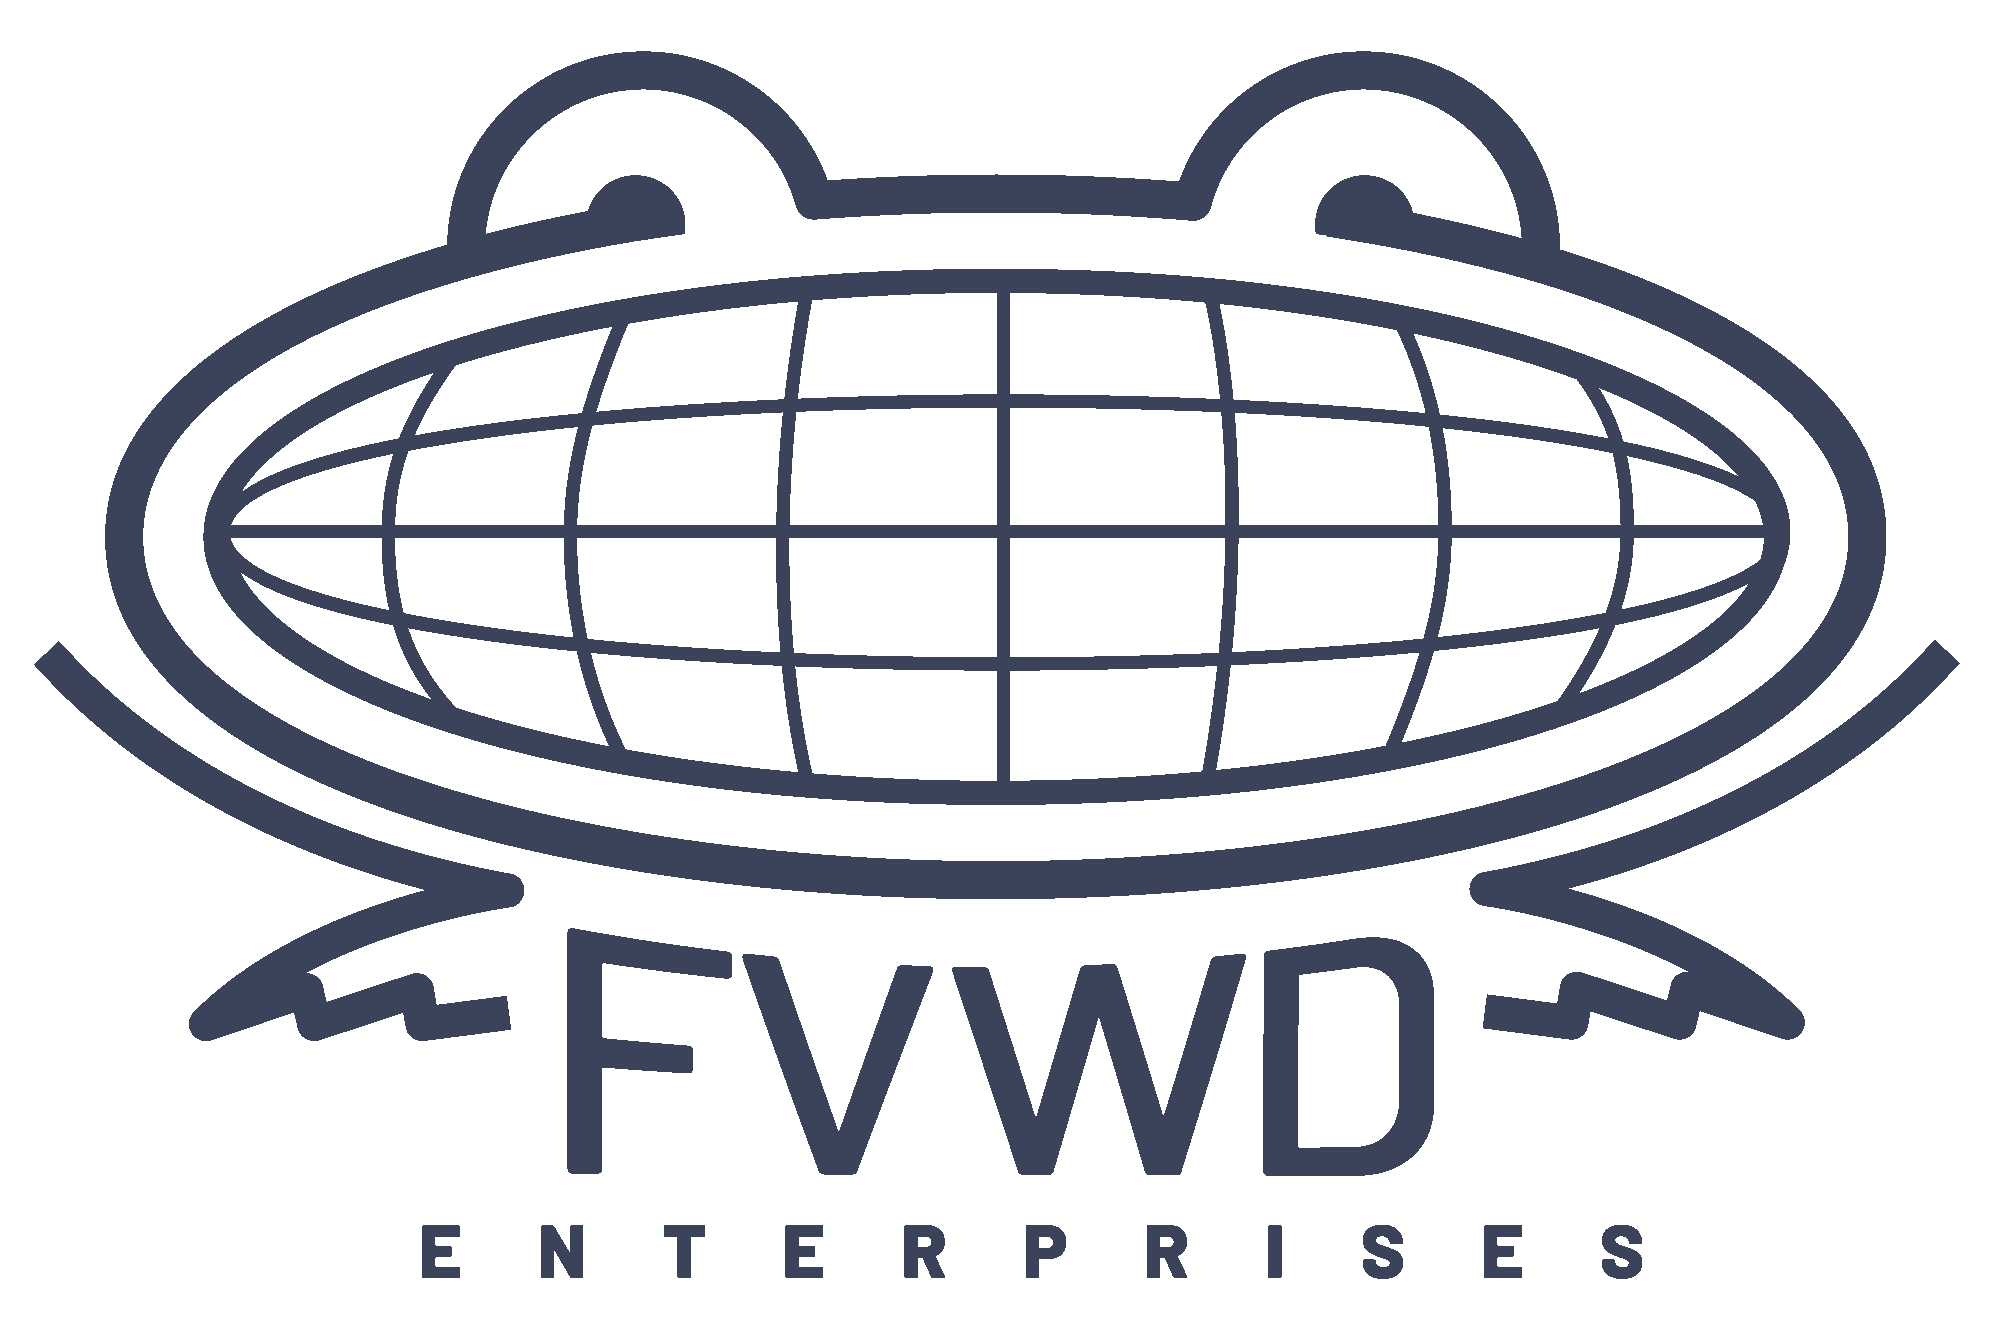 Website SEO Canada - FVWD Enterprises